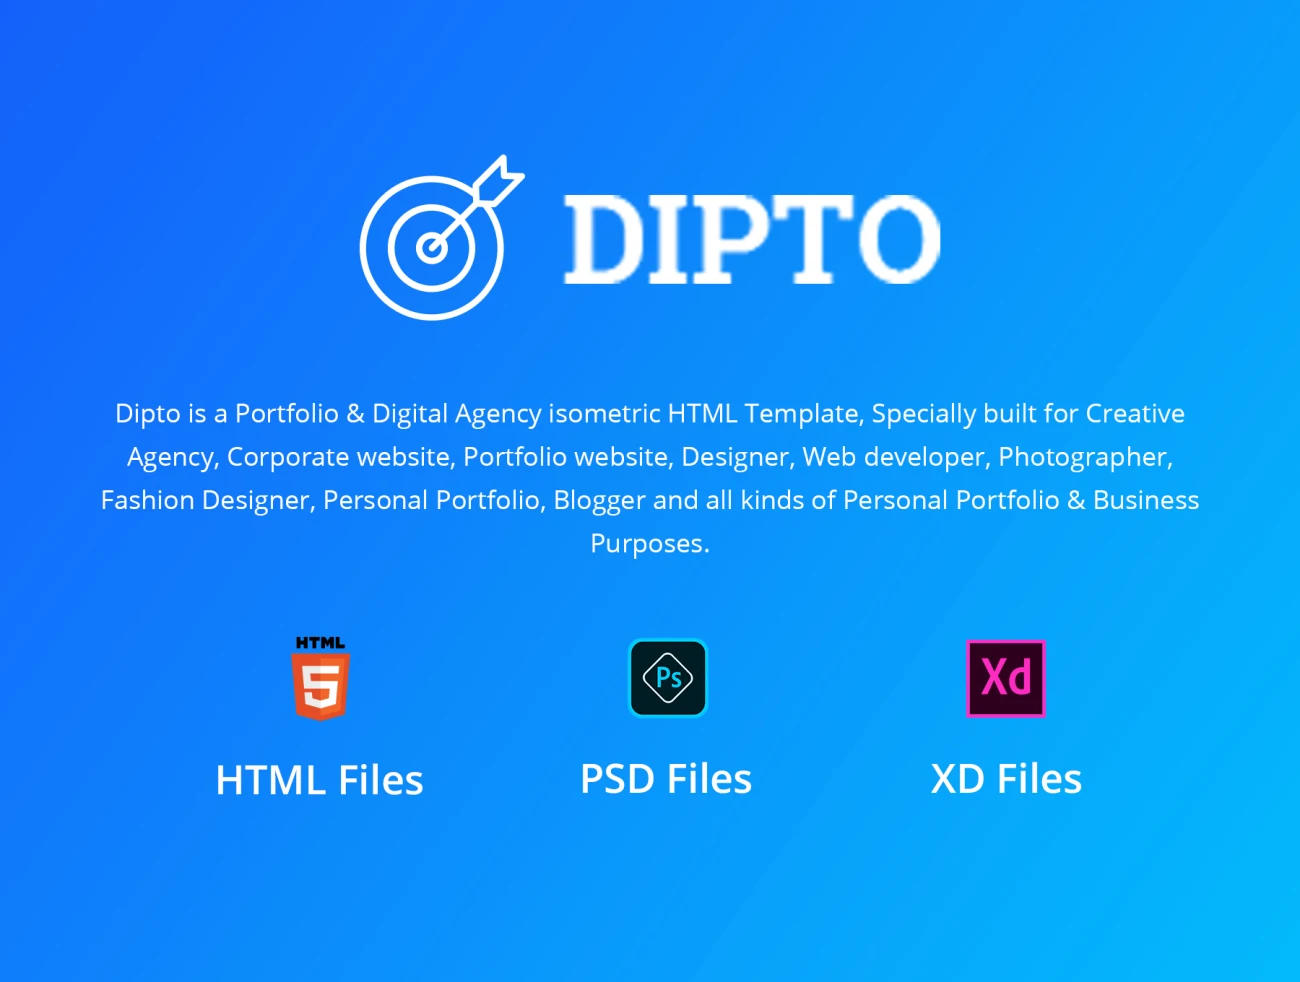 Dipto - Digital Agency HTML Template 数字科技代理商HTML模板-专题页面、主页、介绍、博客、卡片式、引导页、海报、源码、网站、详情-到位啦UI